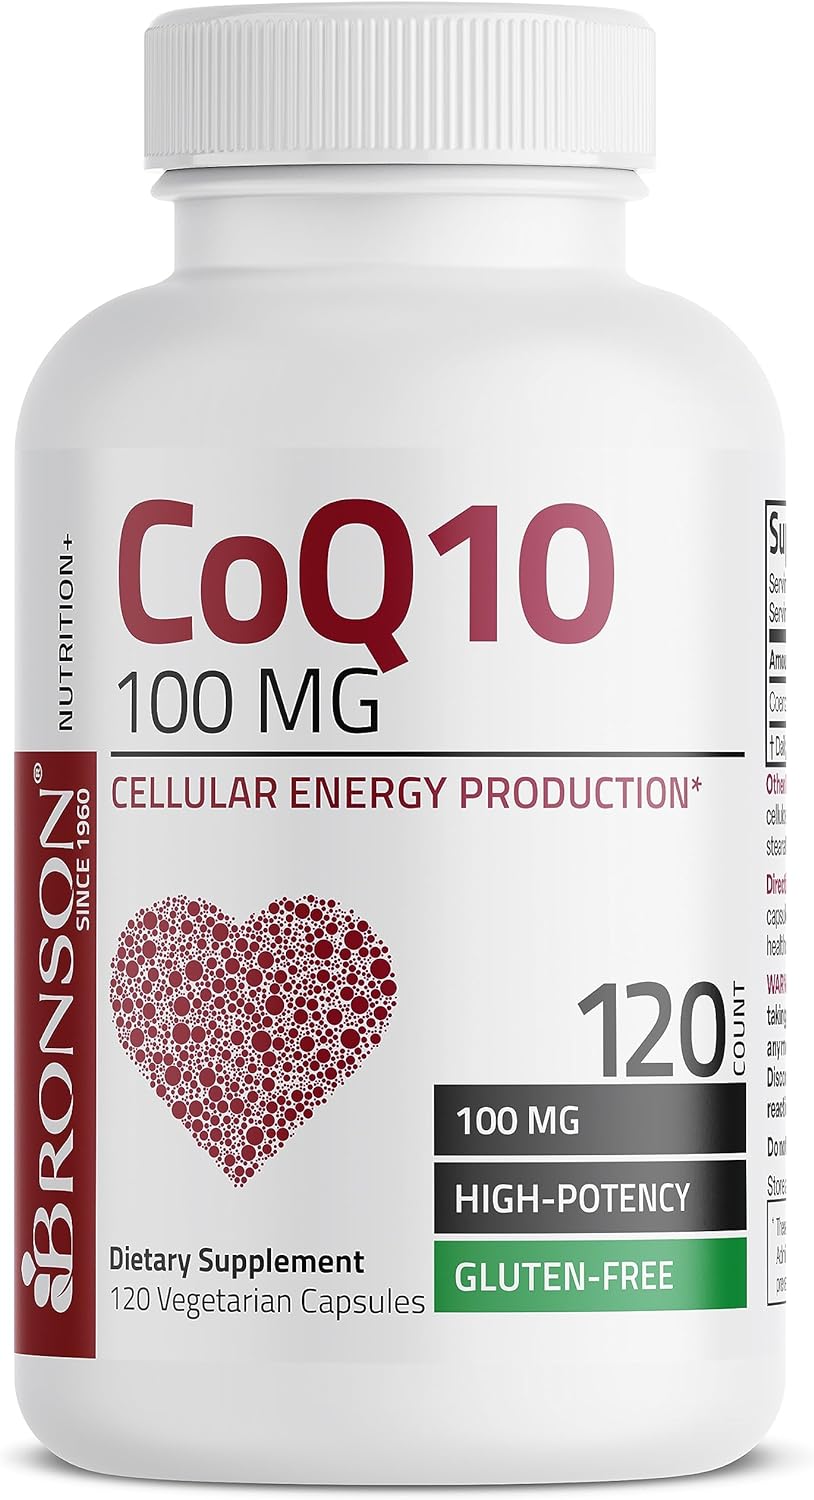 Bronson CoQ10 100 MG High Potency Cellular Energy Production, 120 Vegetarian Capsules